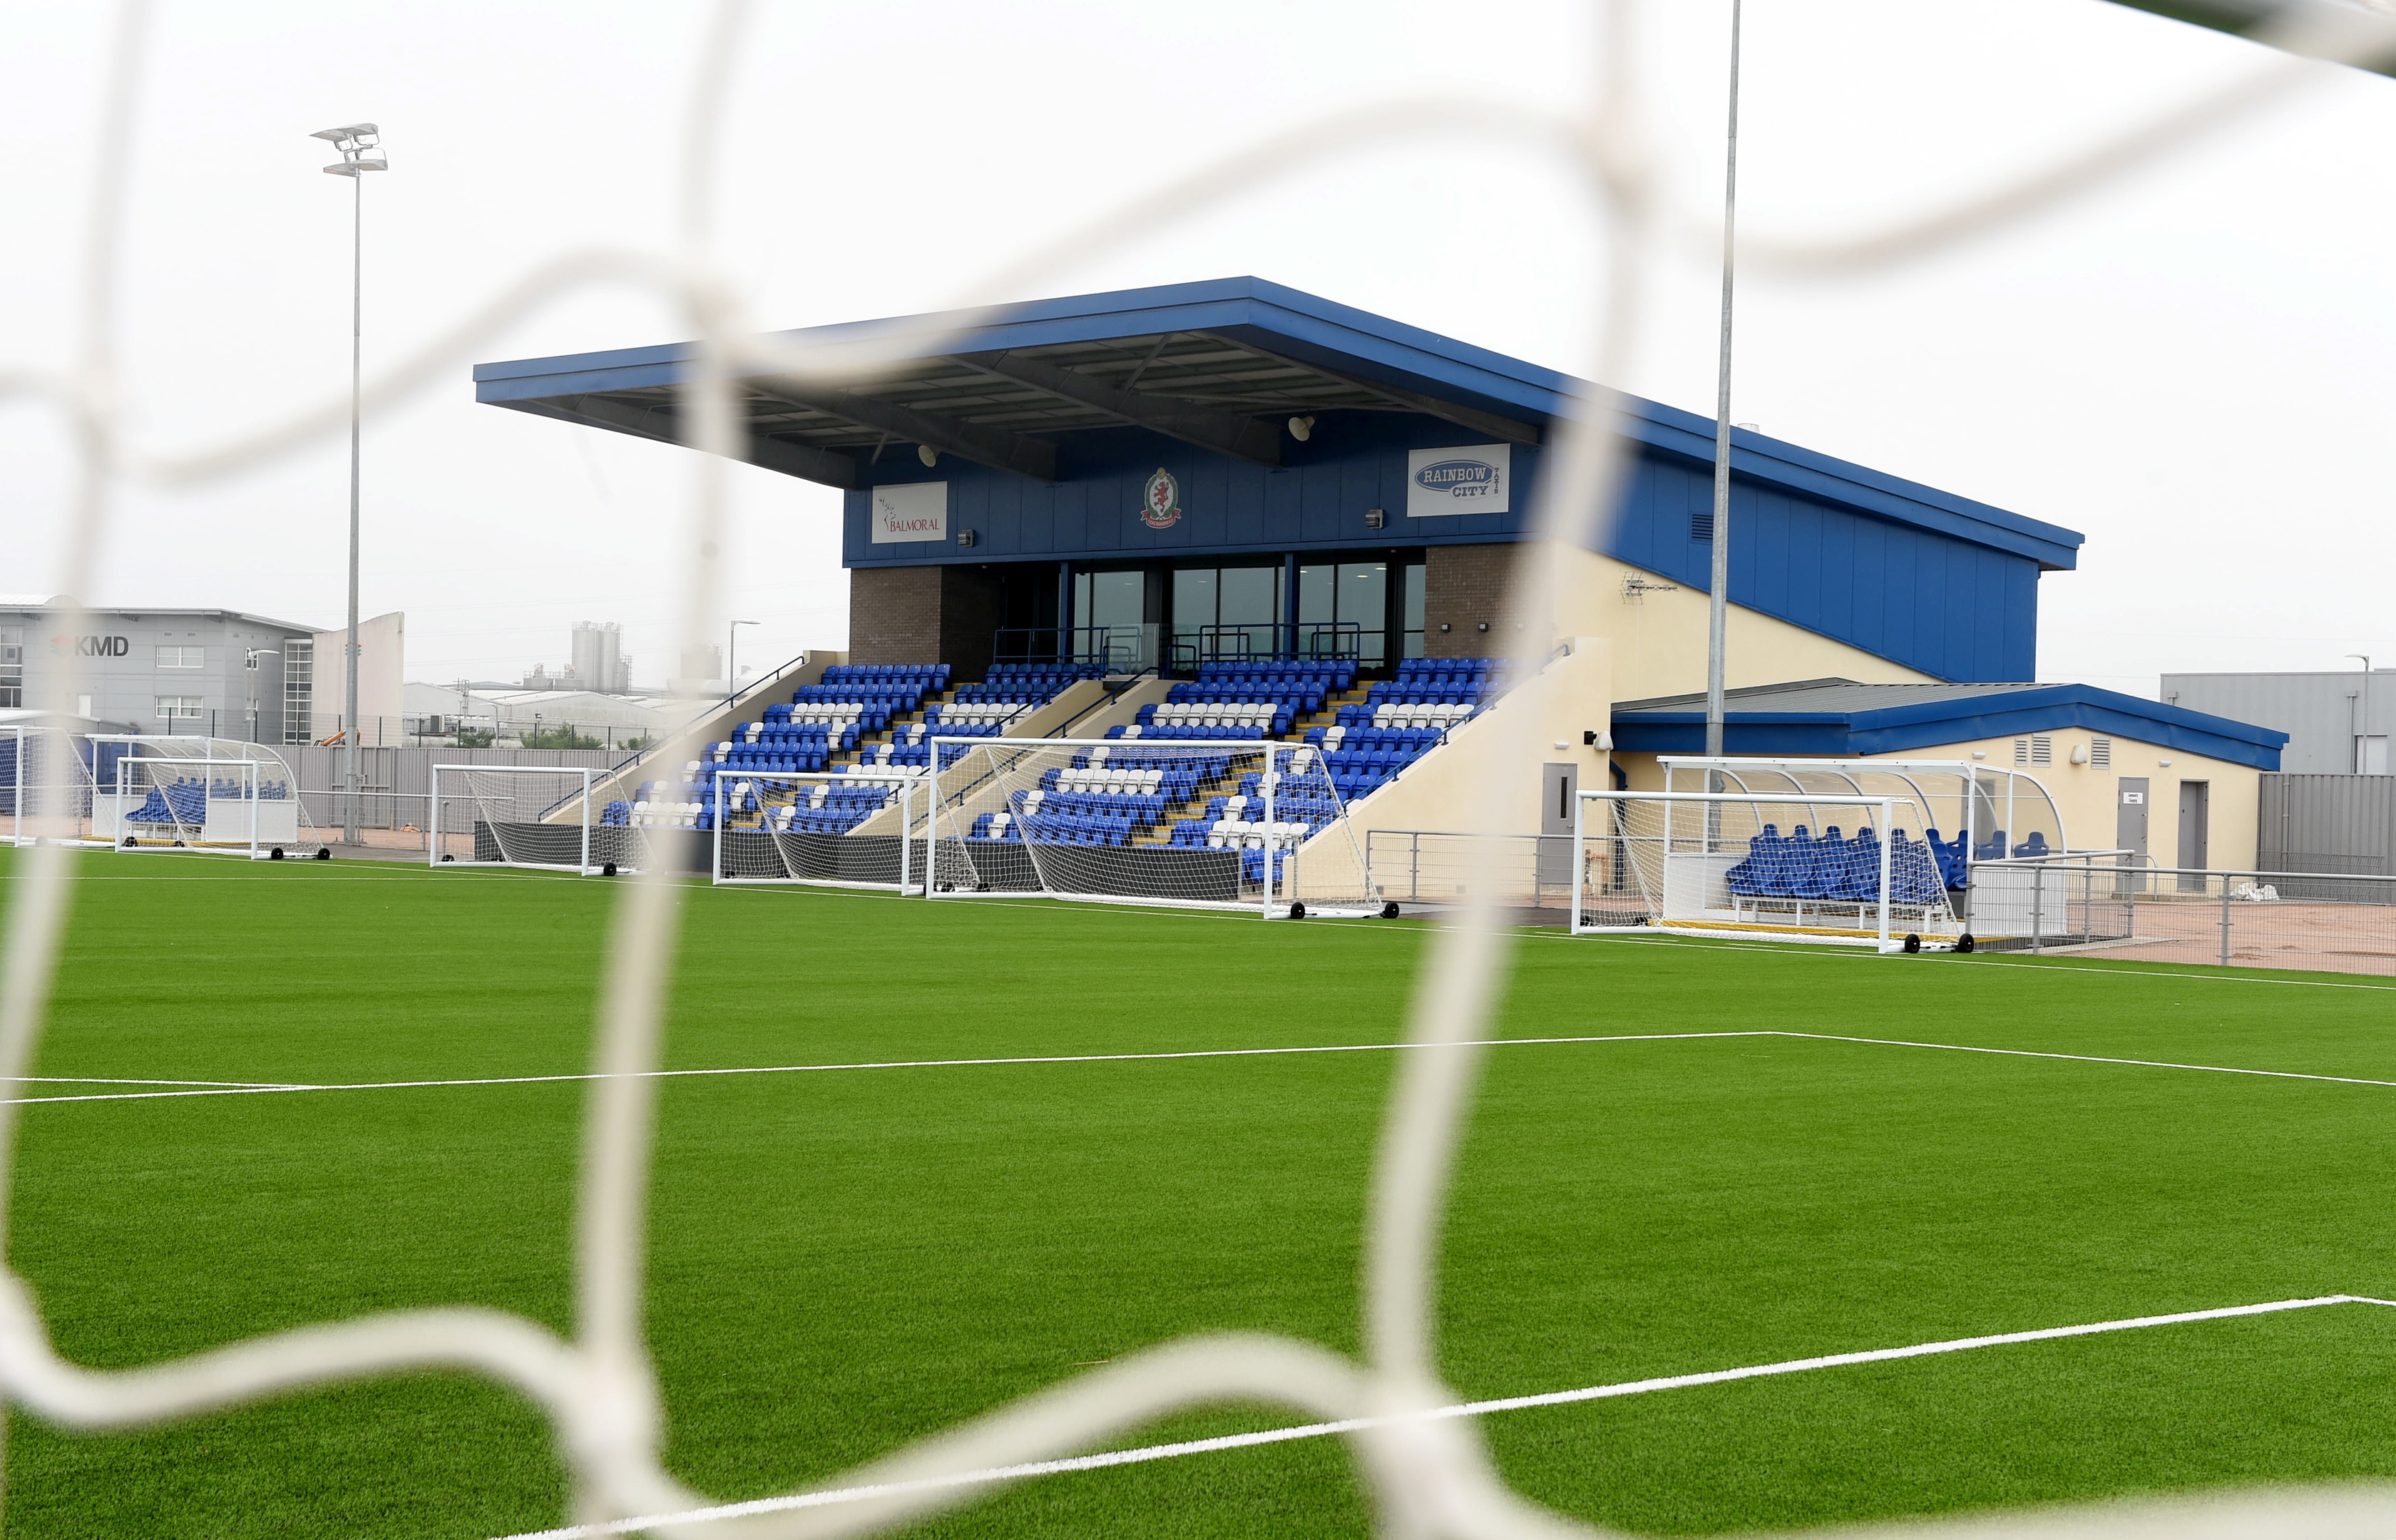 Balmoral Stadium will host League One football this season